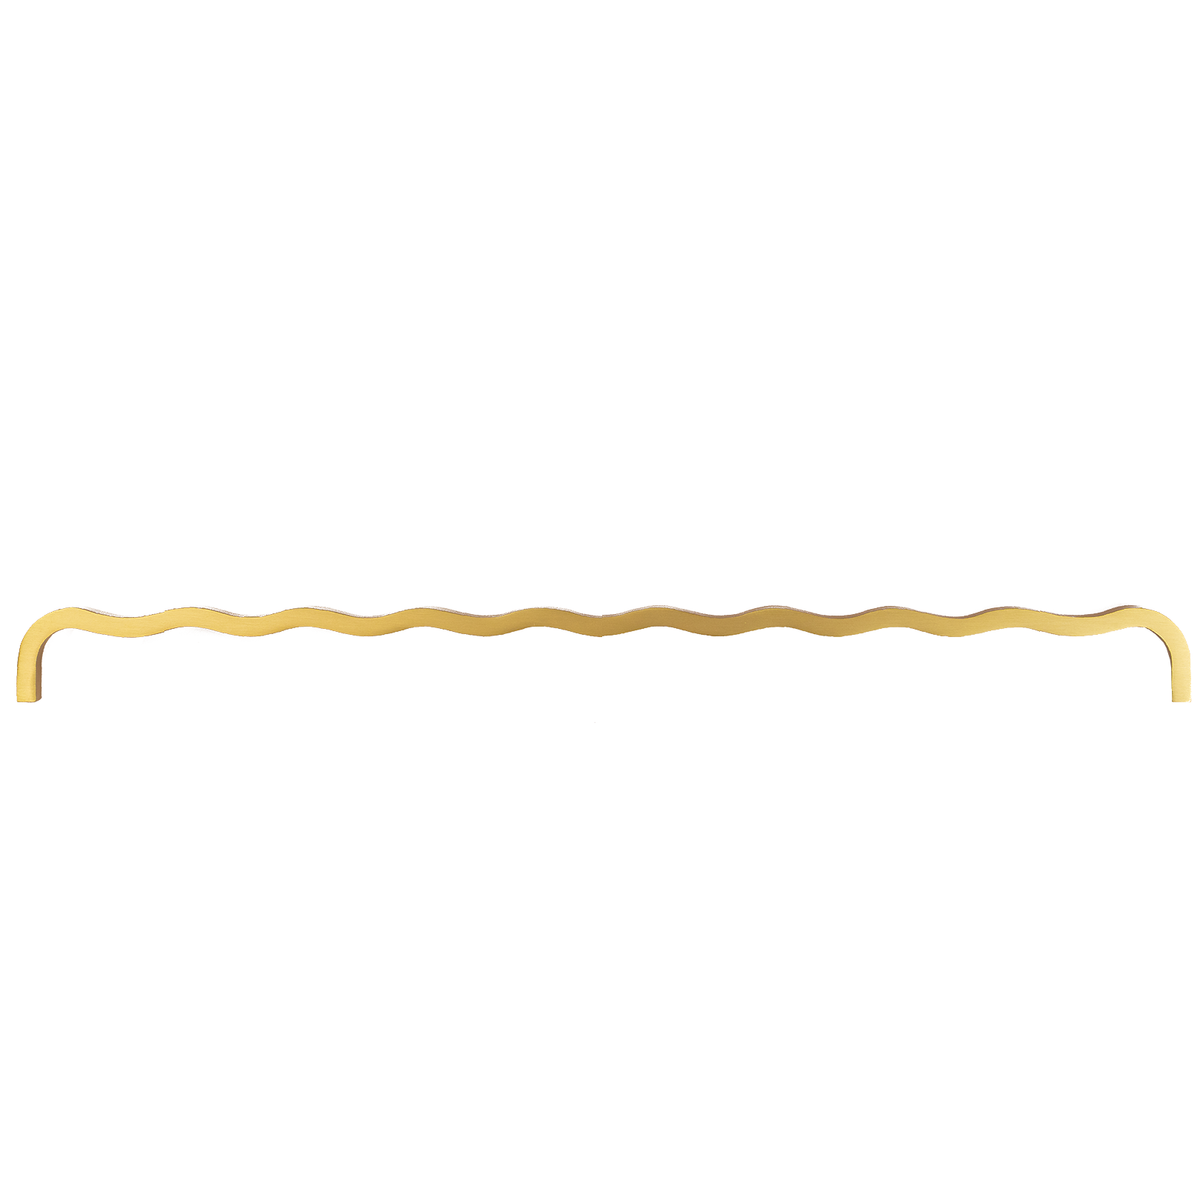 Wavey Solid Brass Handle | Satin Brass S - L